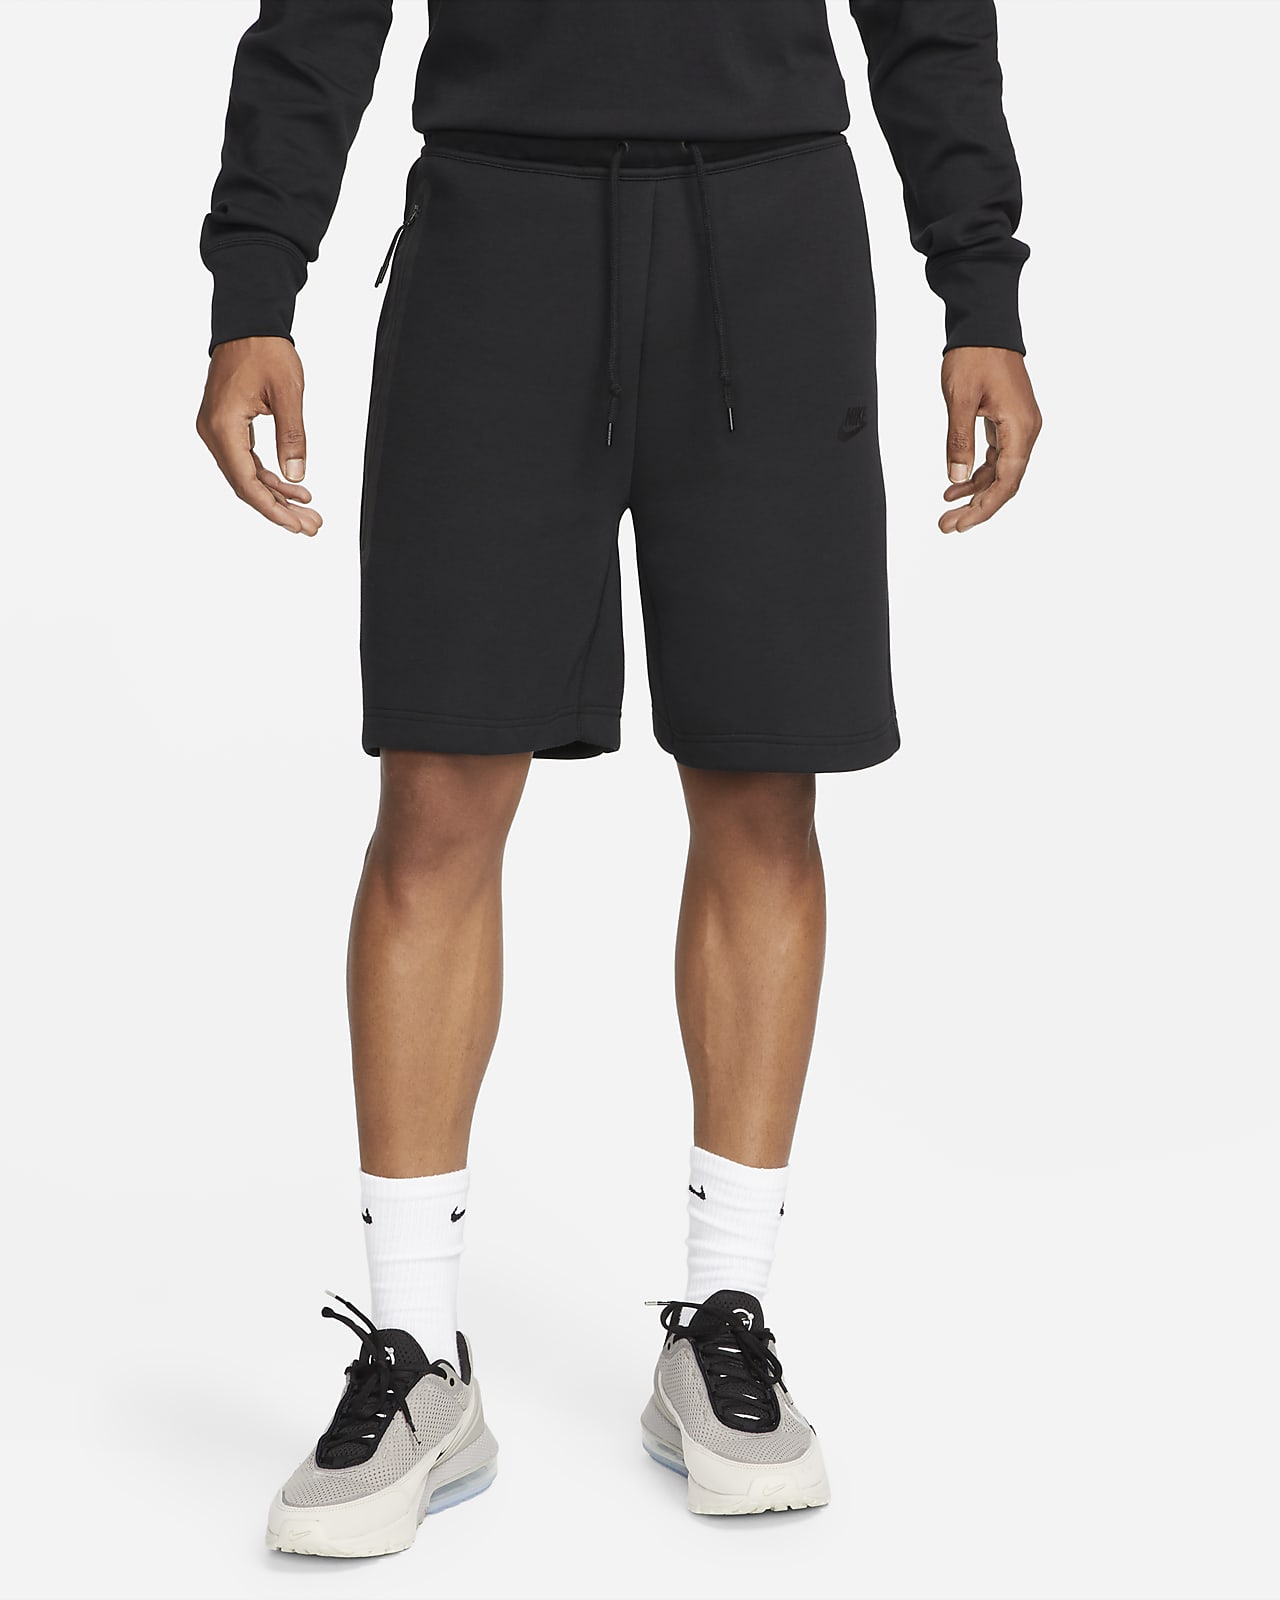 forstene Begrænsning æggelederne Nike Sportswear Tech Fleece Men's Shorts. Nike.com